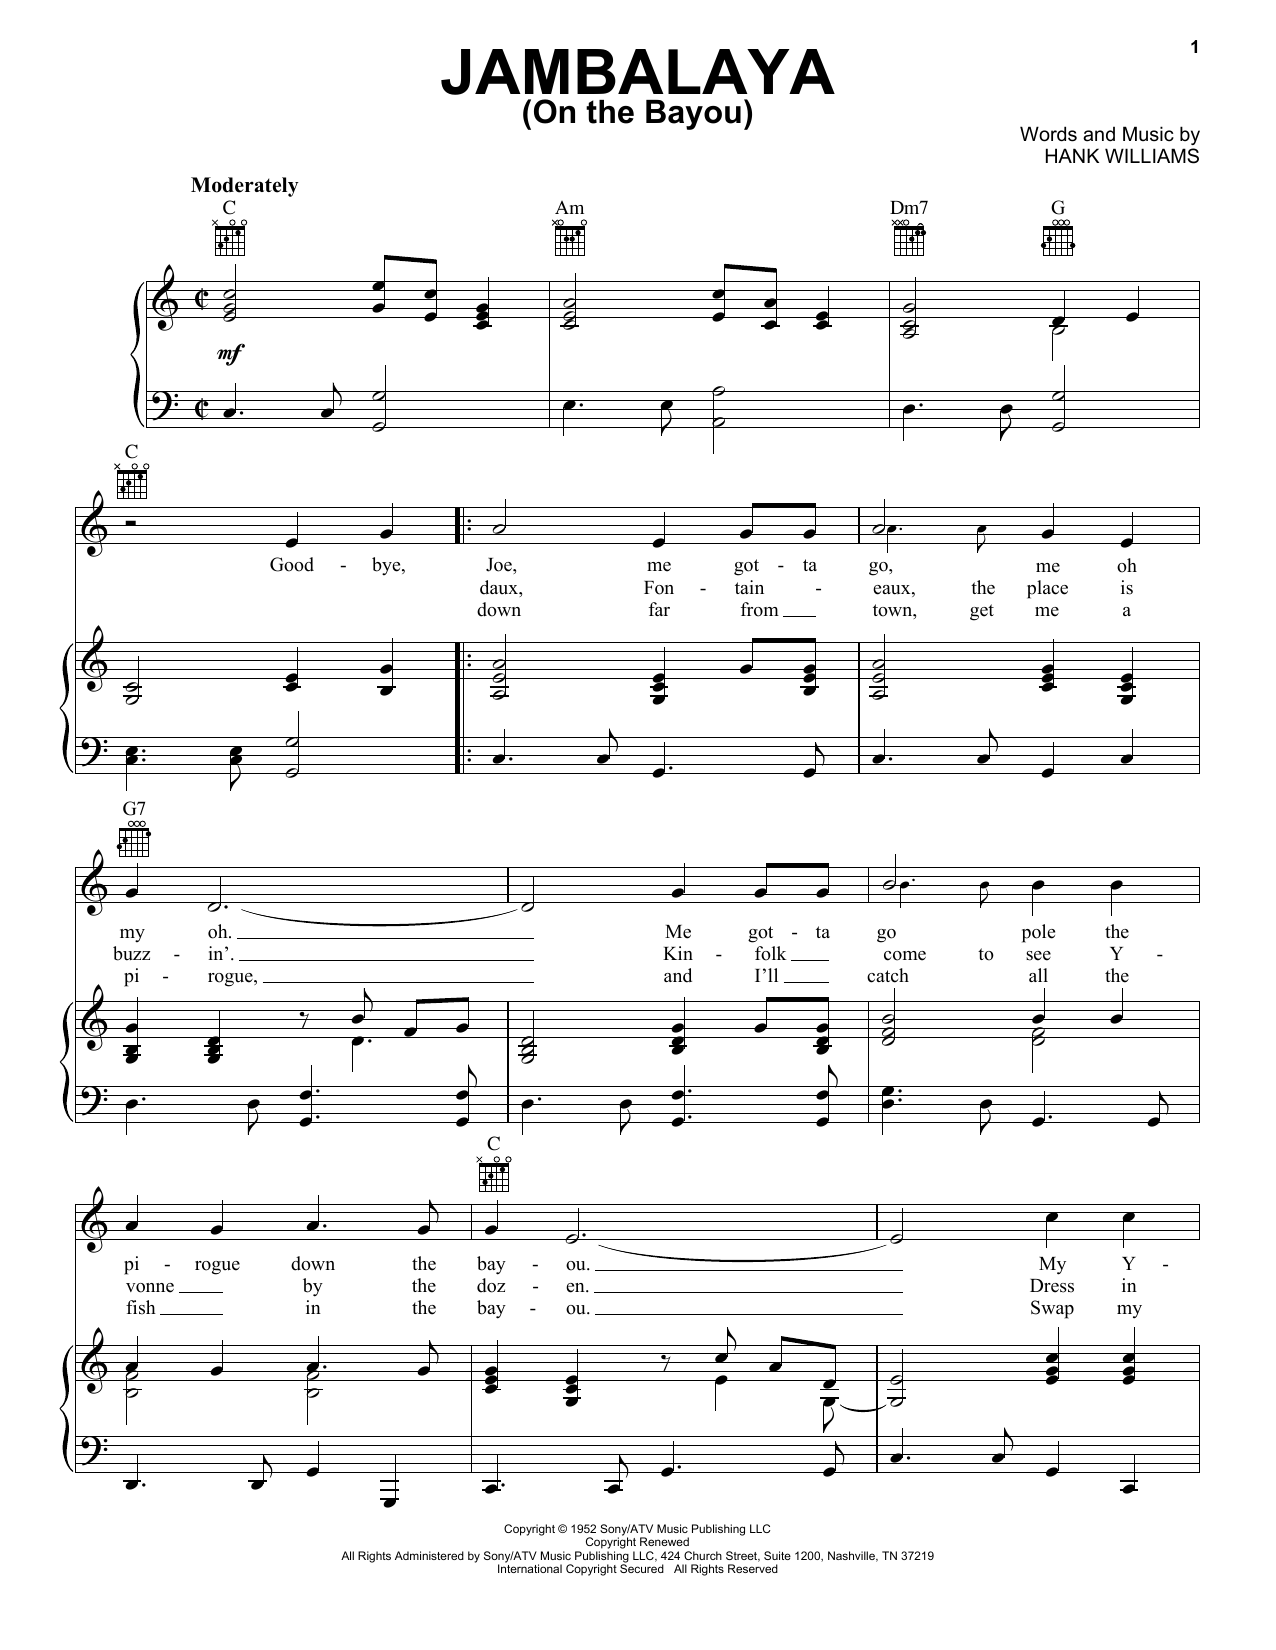 Hank Williams Jambalaya (On The Bayou) Sheet Music Notes & Chords for Accordion - Download or Print PDF